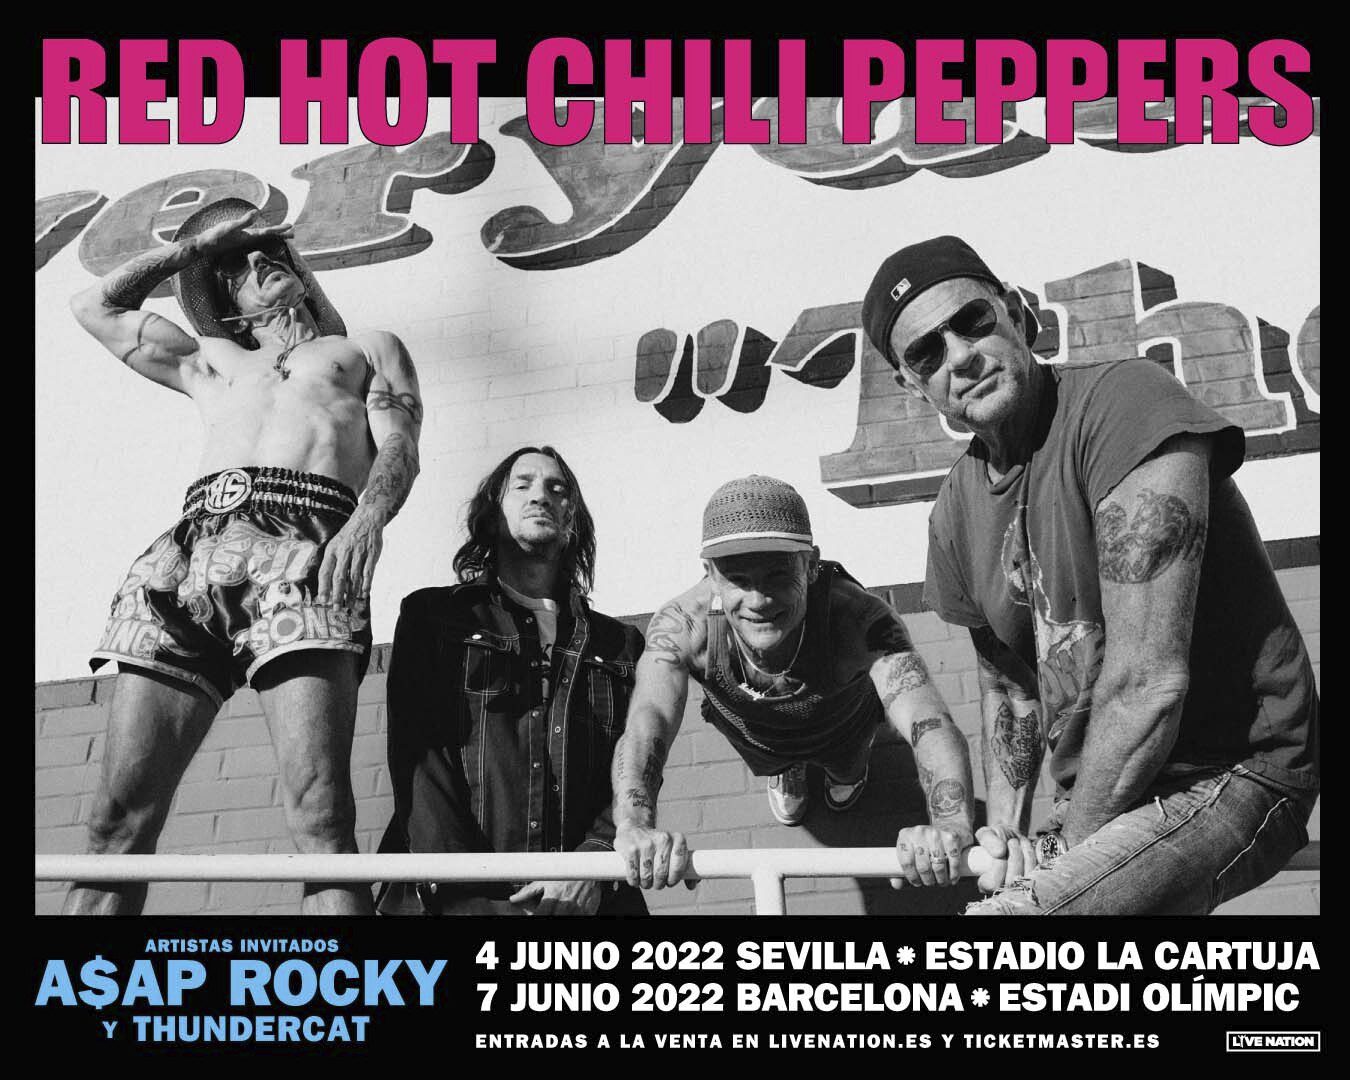 Red Hot Chili Peppers anuncian gira mundial en 2022 con parada en Sevilla y Barcelona